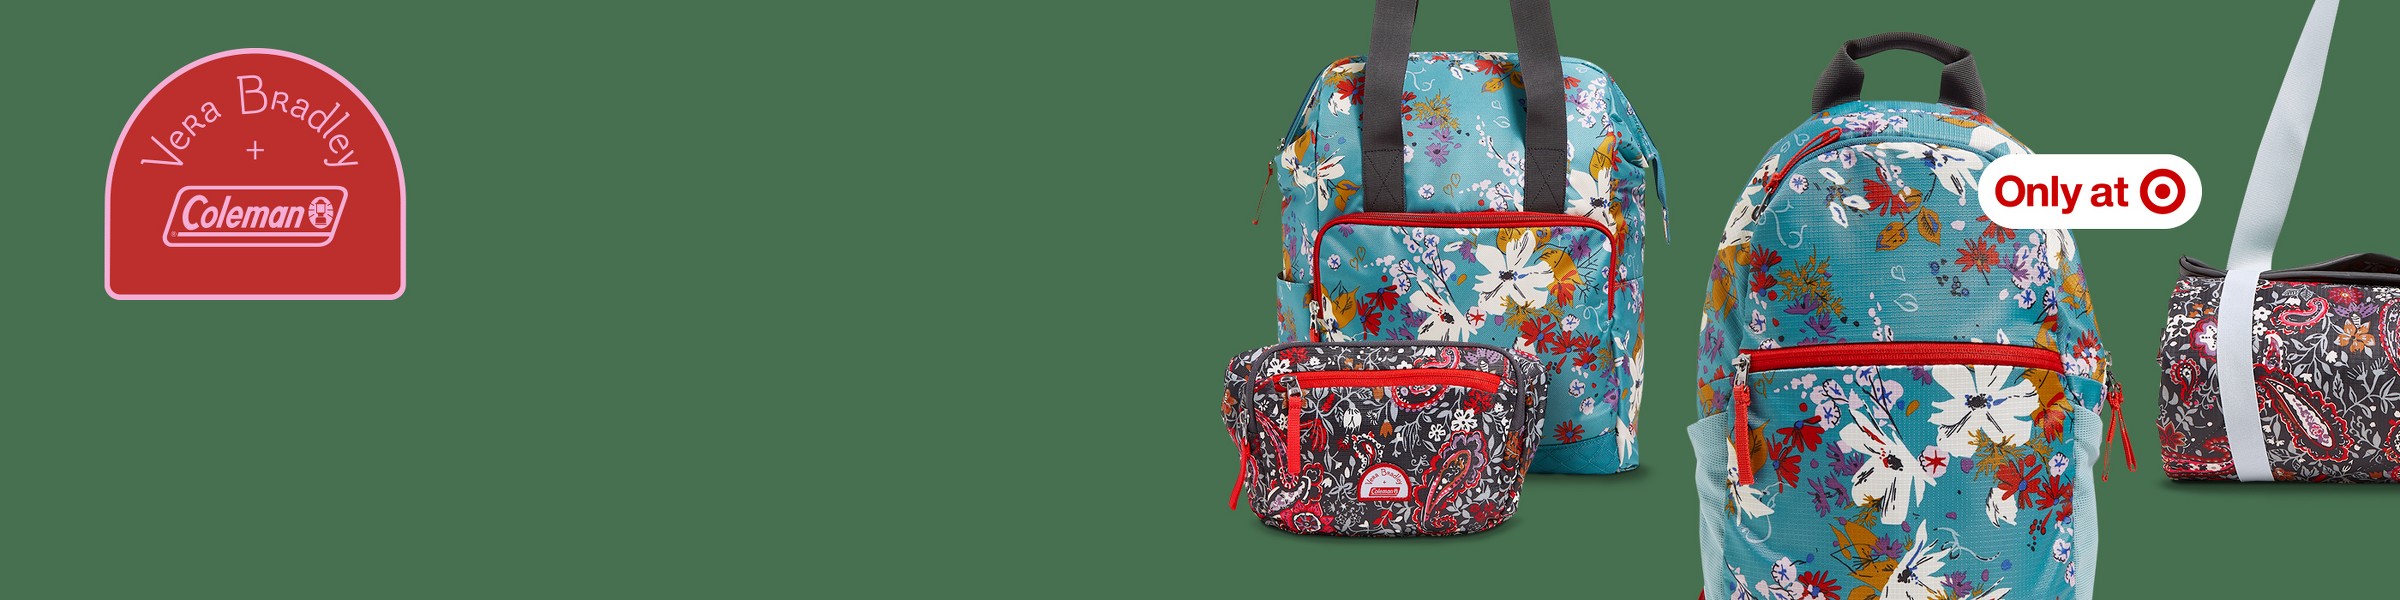 Drago-n Ba-ll Monkeys & Legend School Backpack Lightweight Bookbags Students Schoolbag Travel Daypack Laptop Bag For Girls Boys